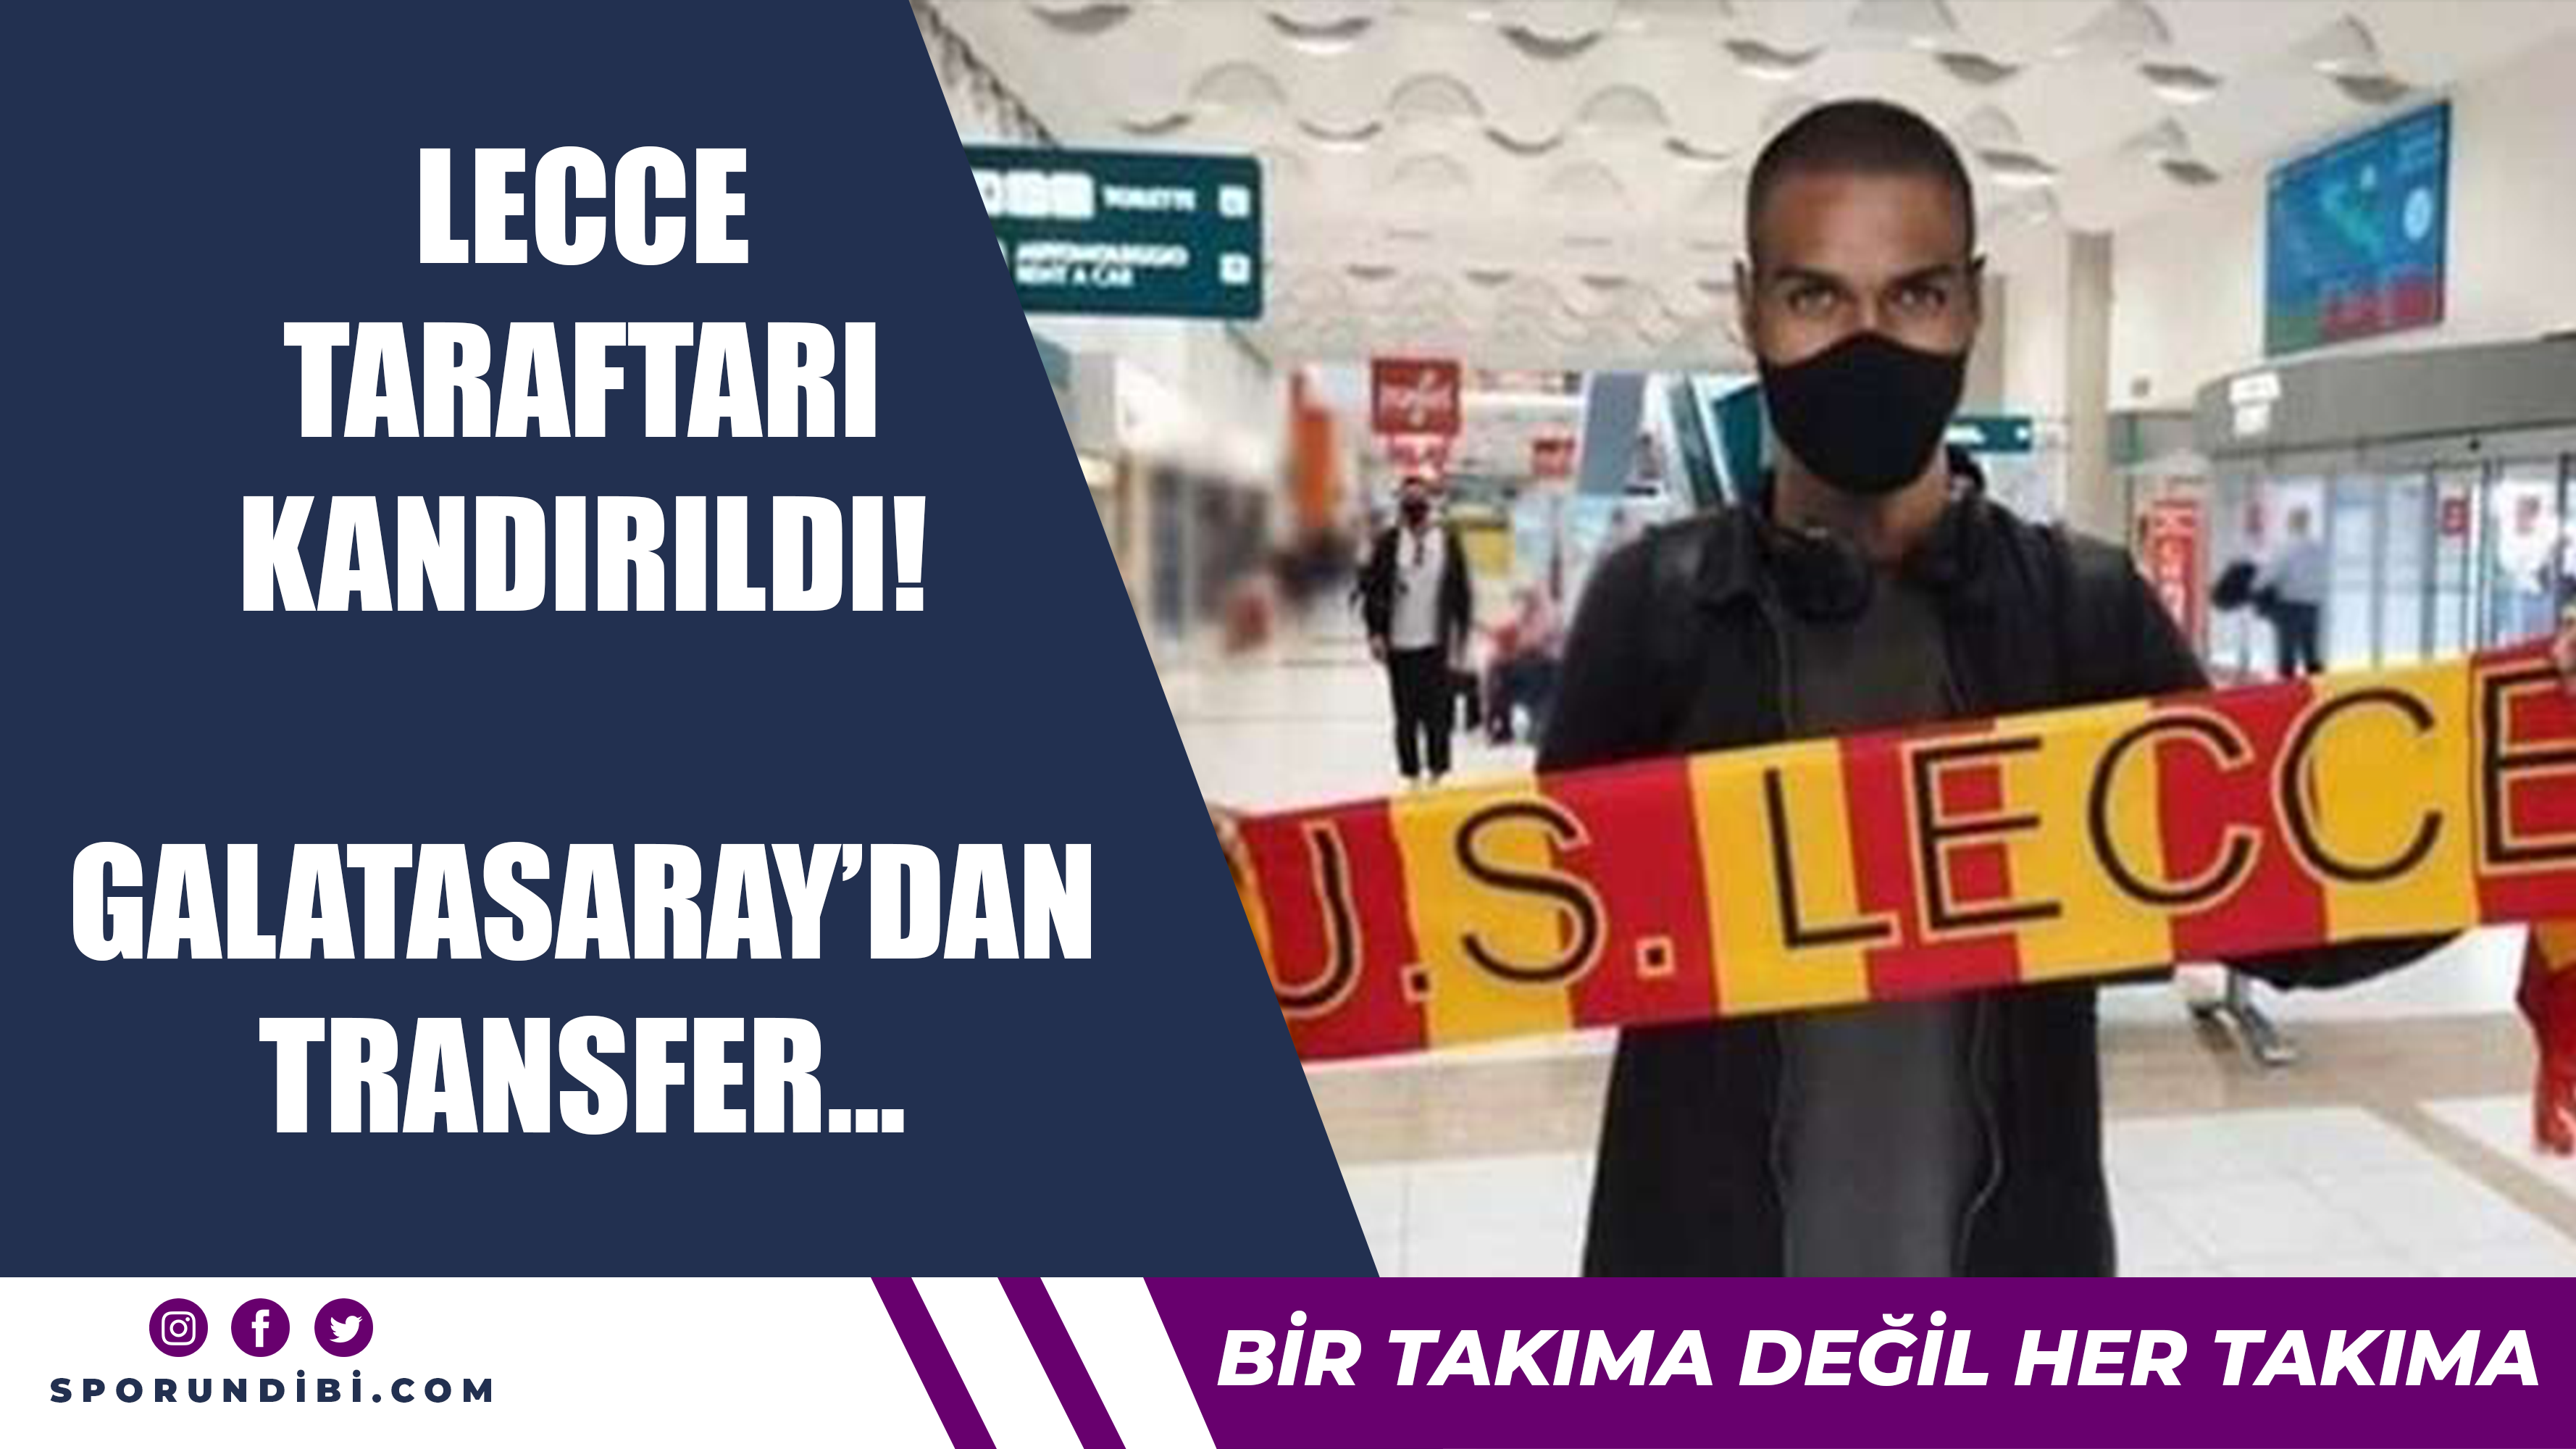 Lecce taraftarları kandırıldı! Galatasaray'dan transfer...